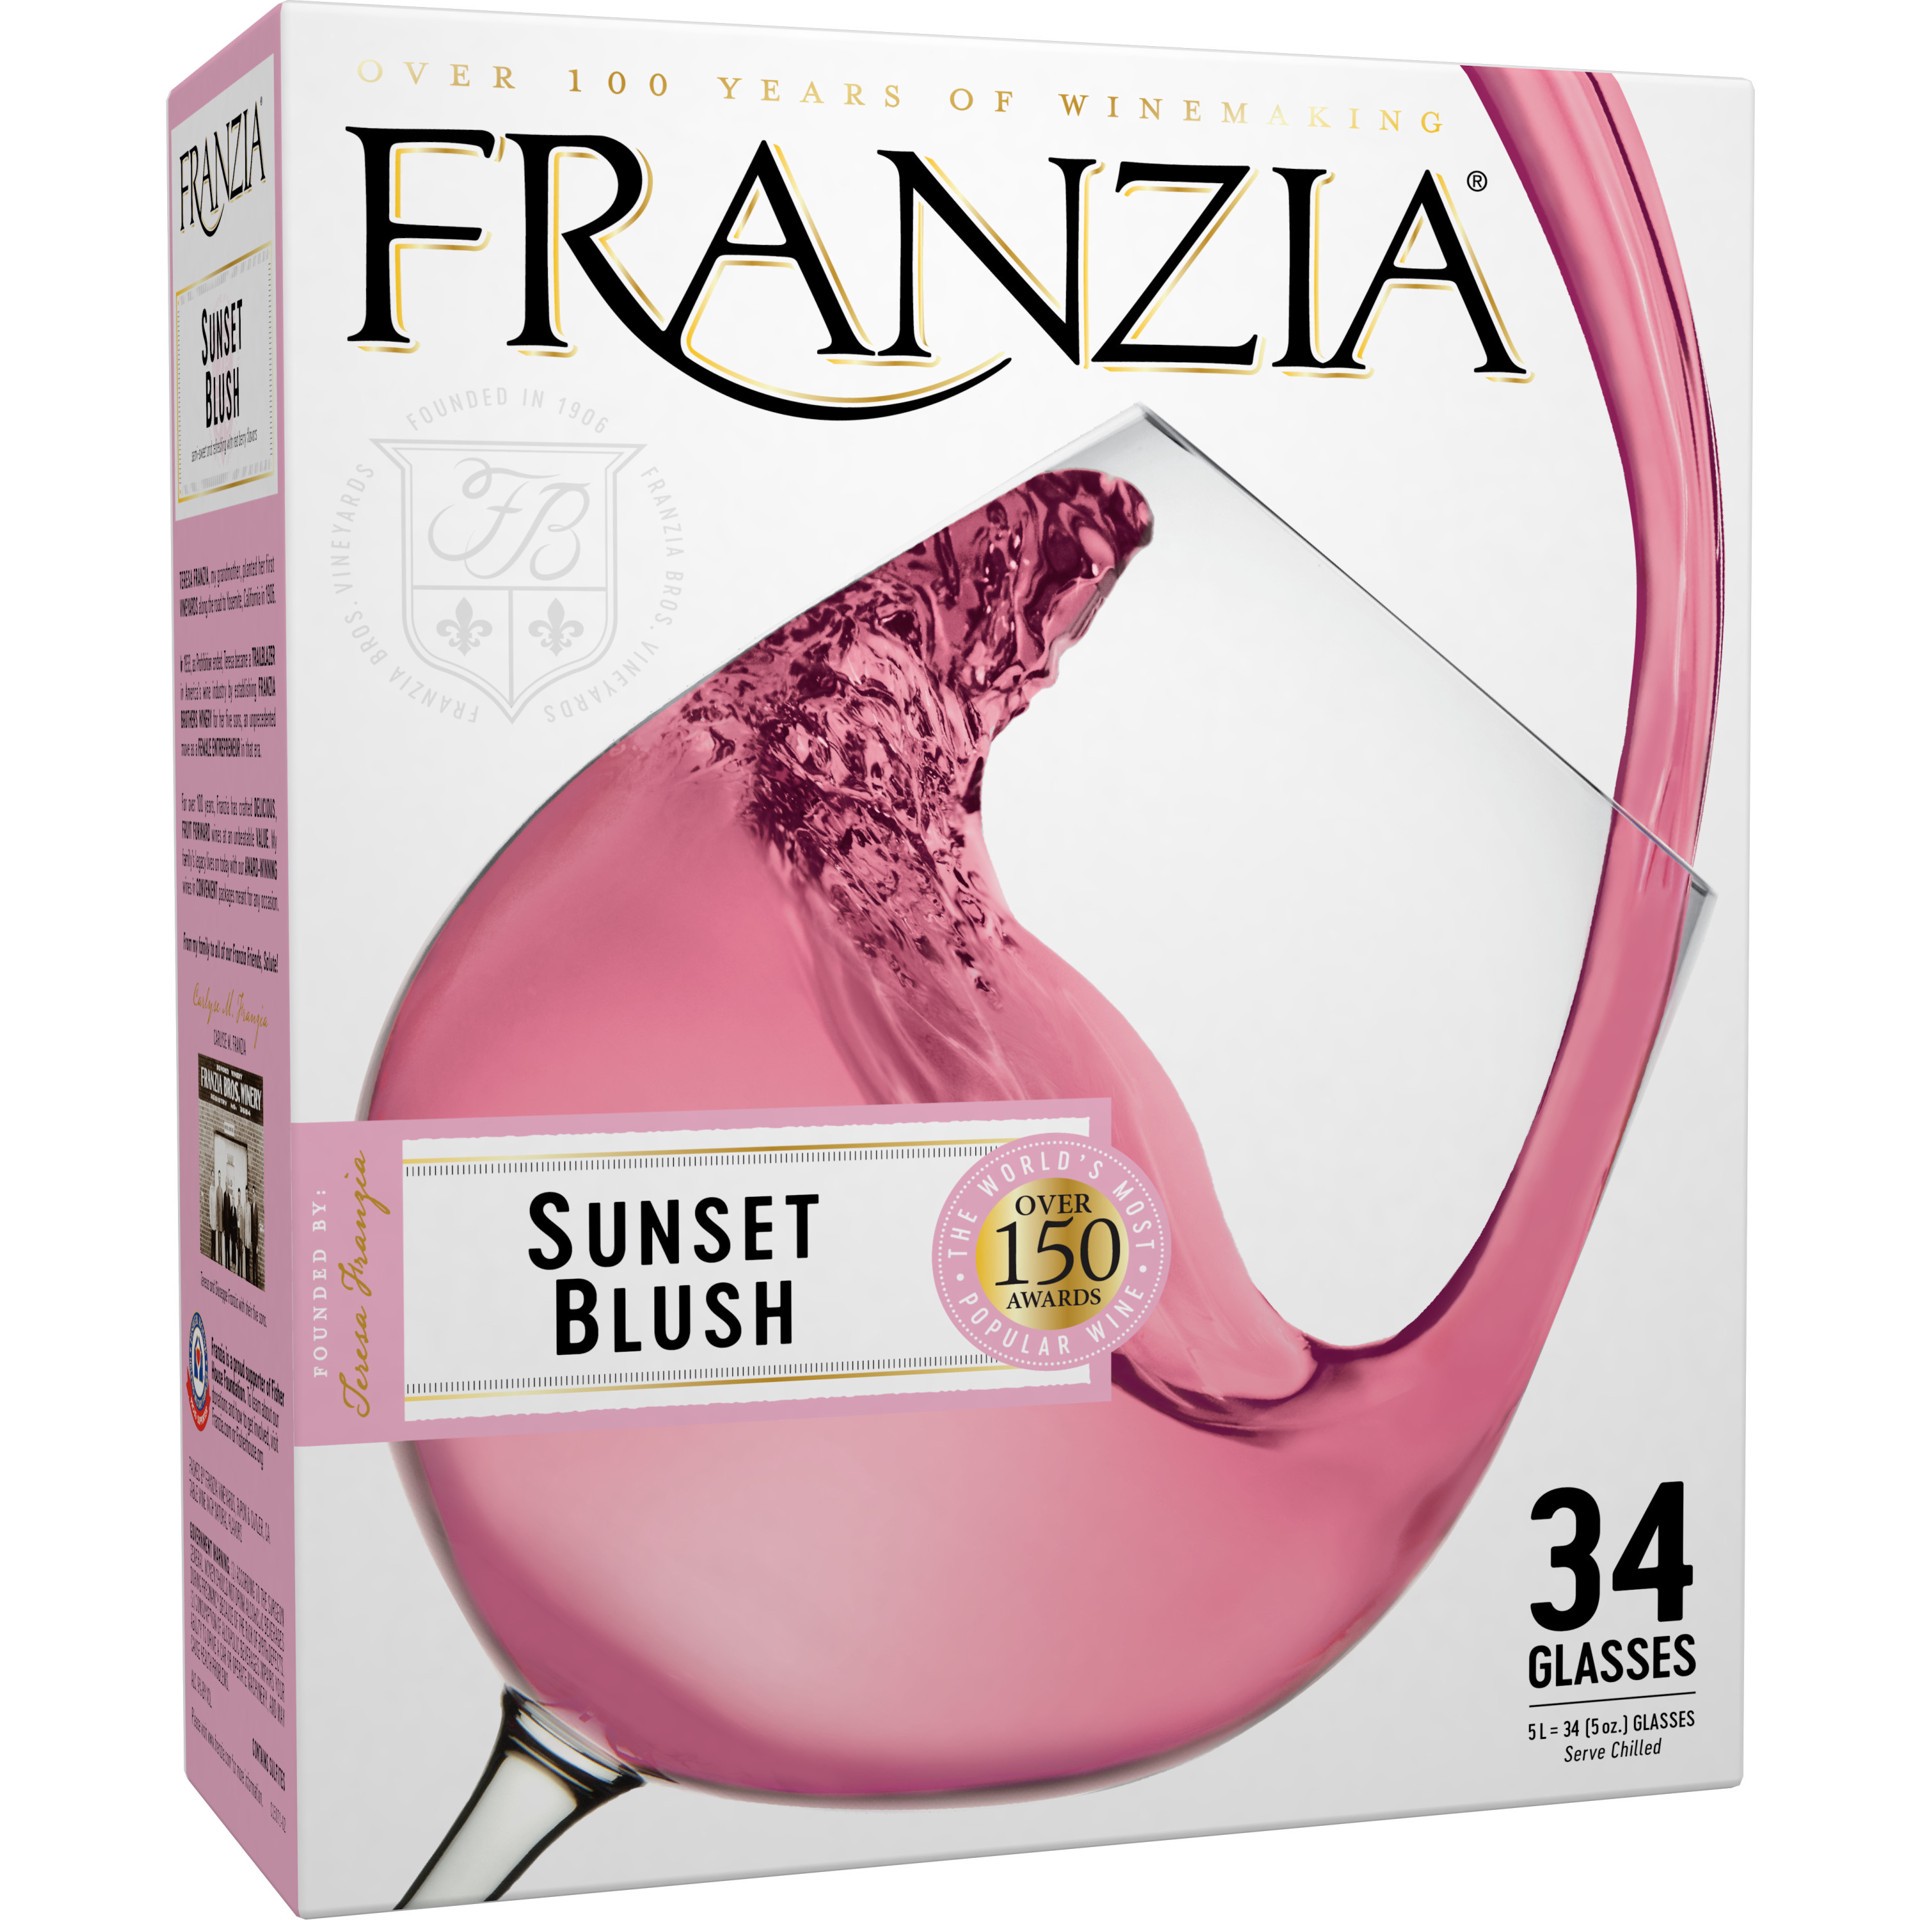 slide 1 of 27, Franzia Sunset Blush Rose Wine - 5L Box, 5 liter